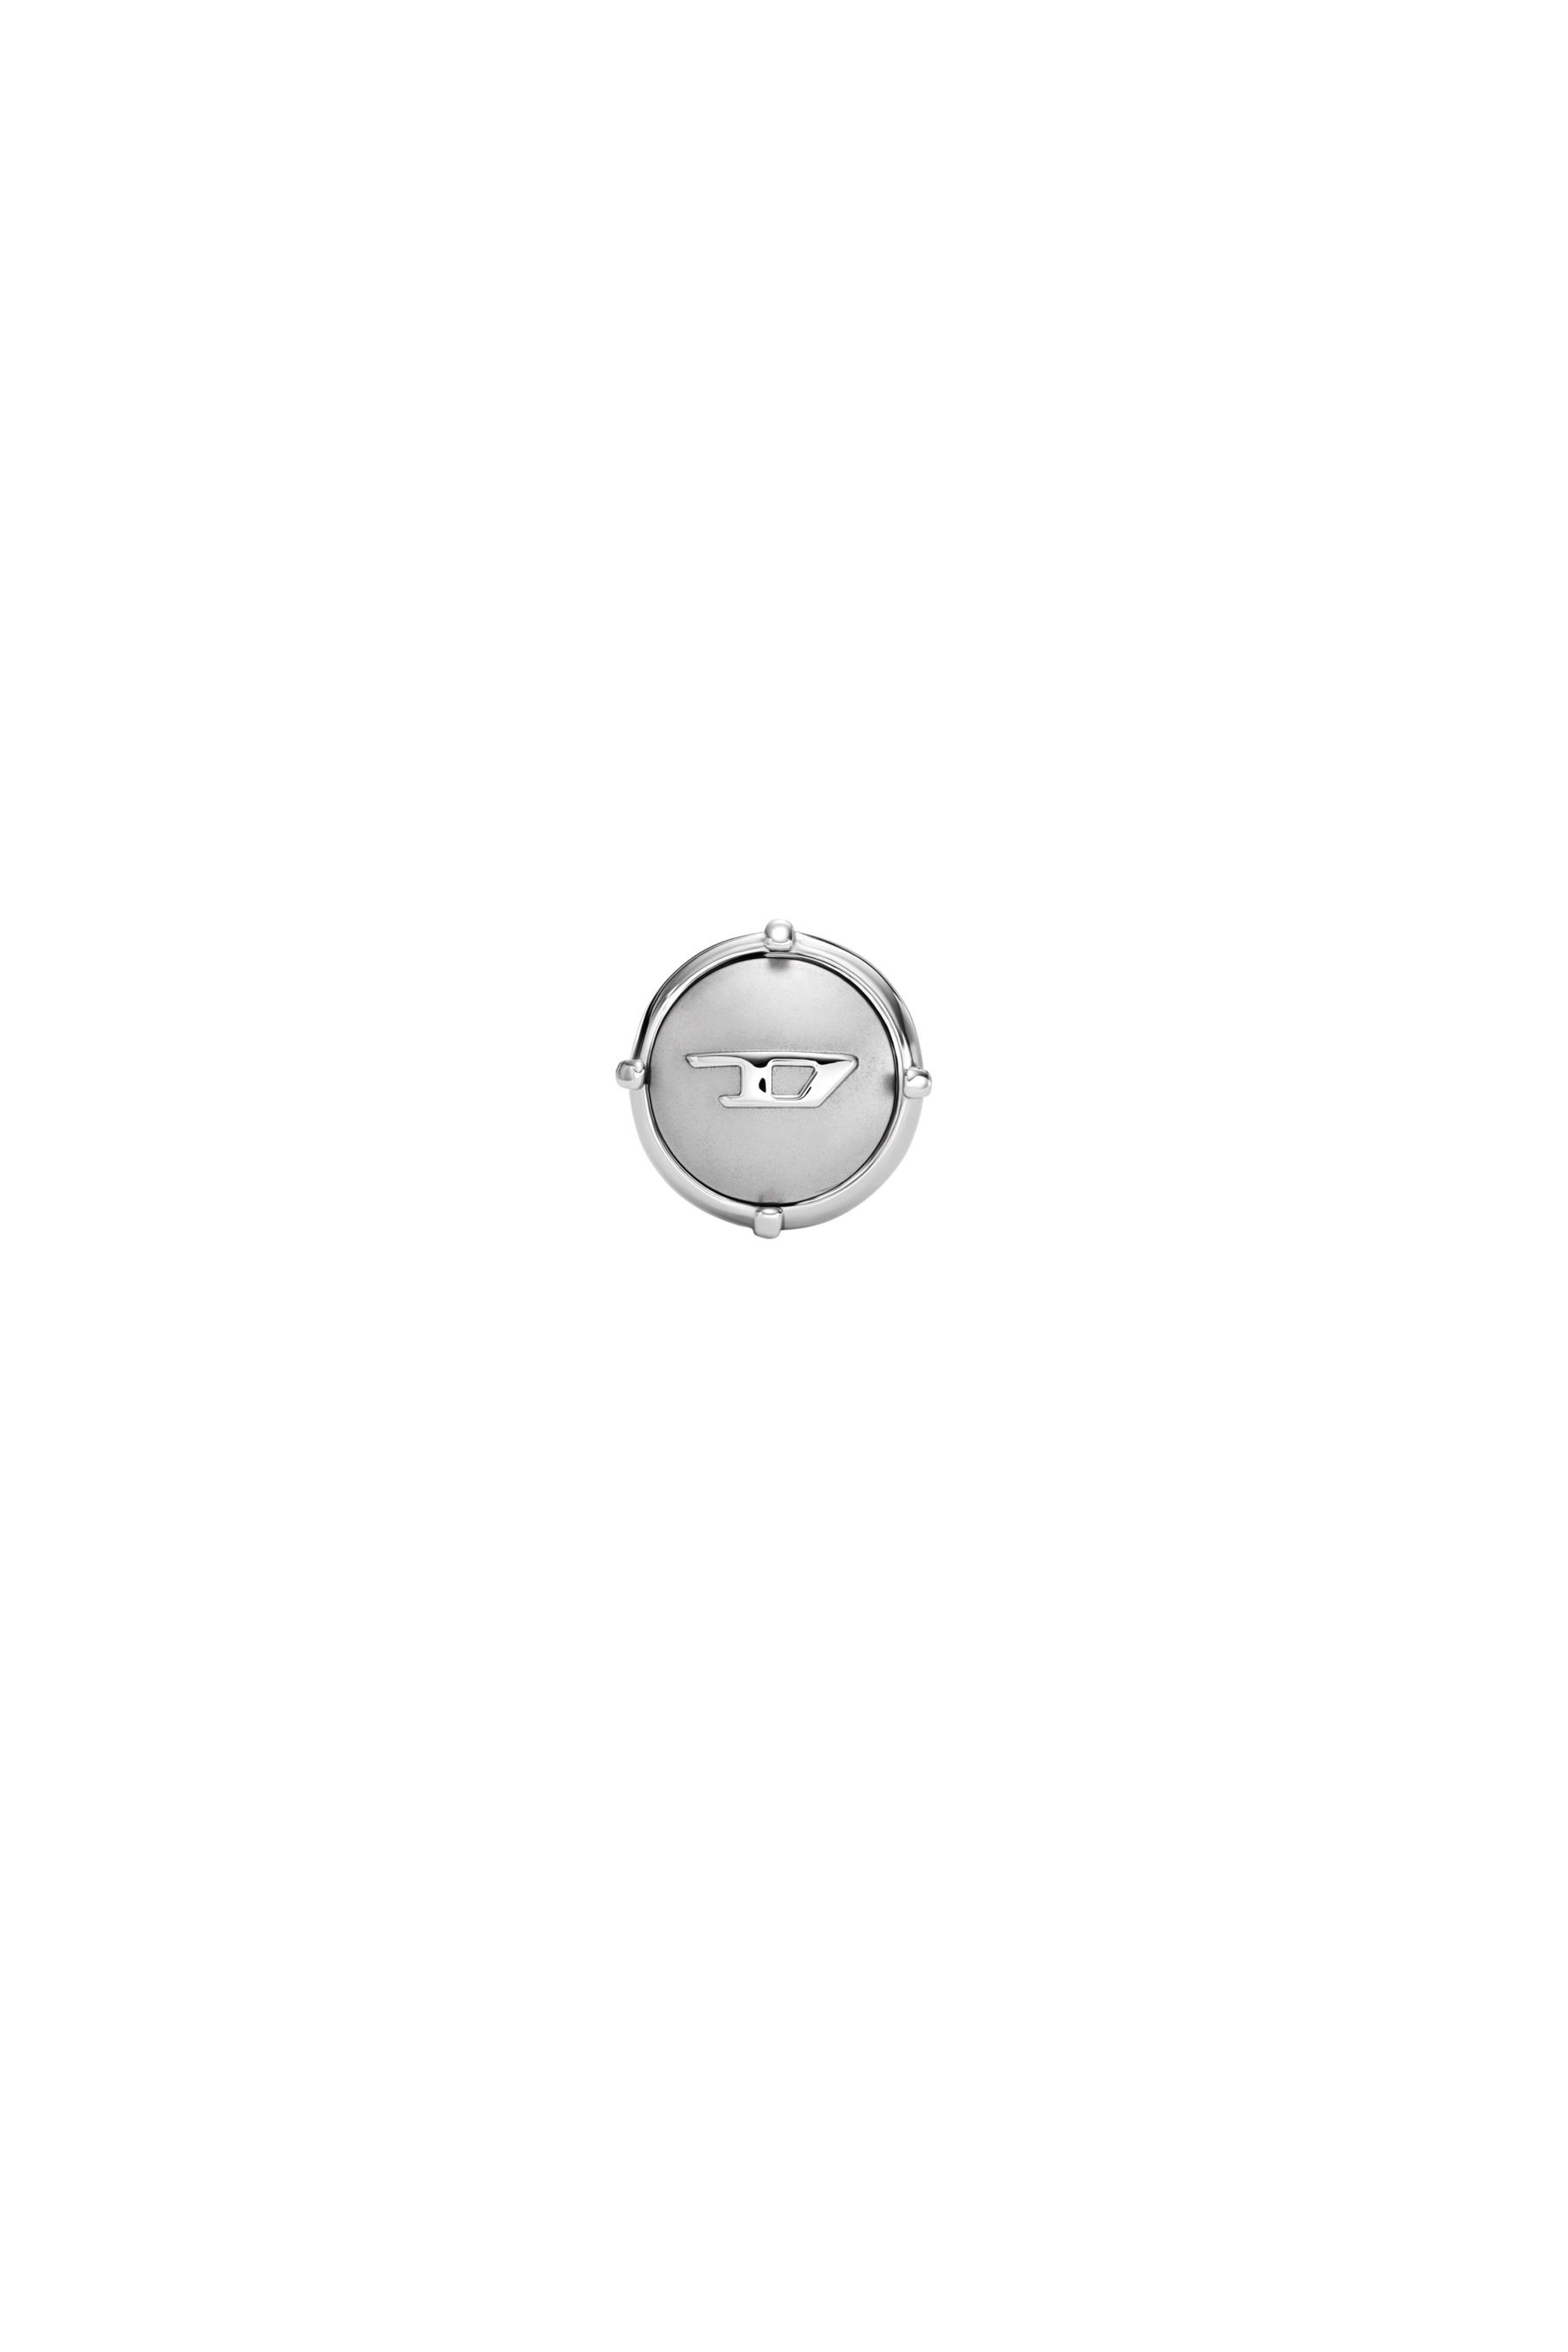 Diesel - DX1495, Male Stainless steel stud earring in シルバー - Image 2